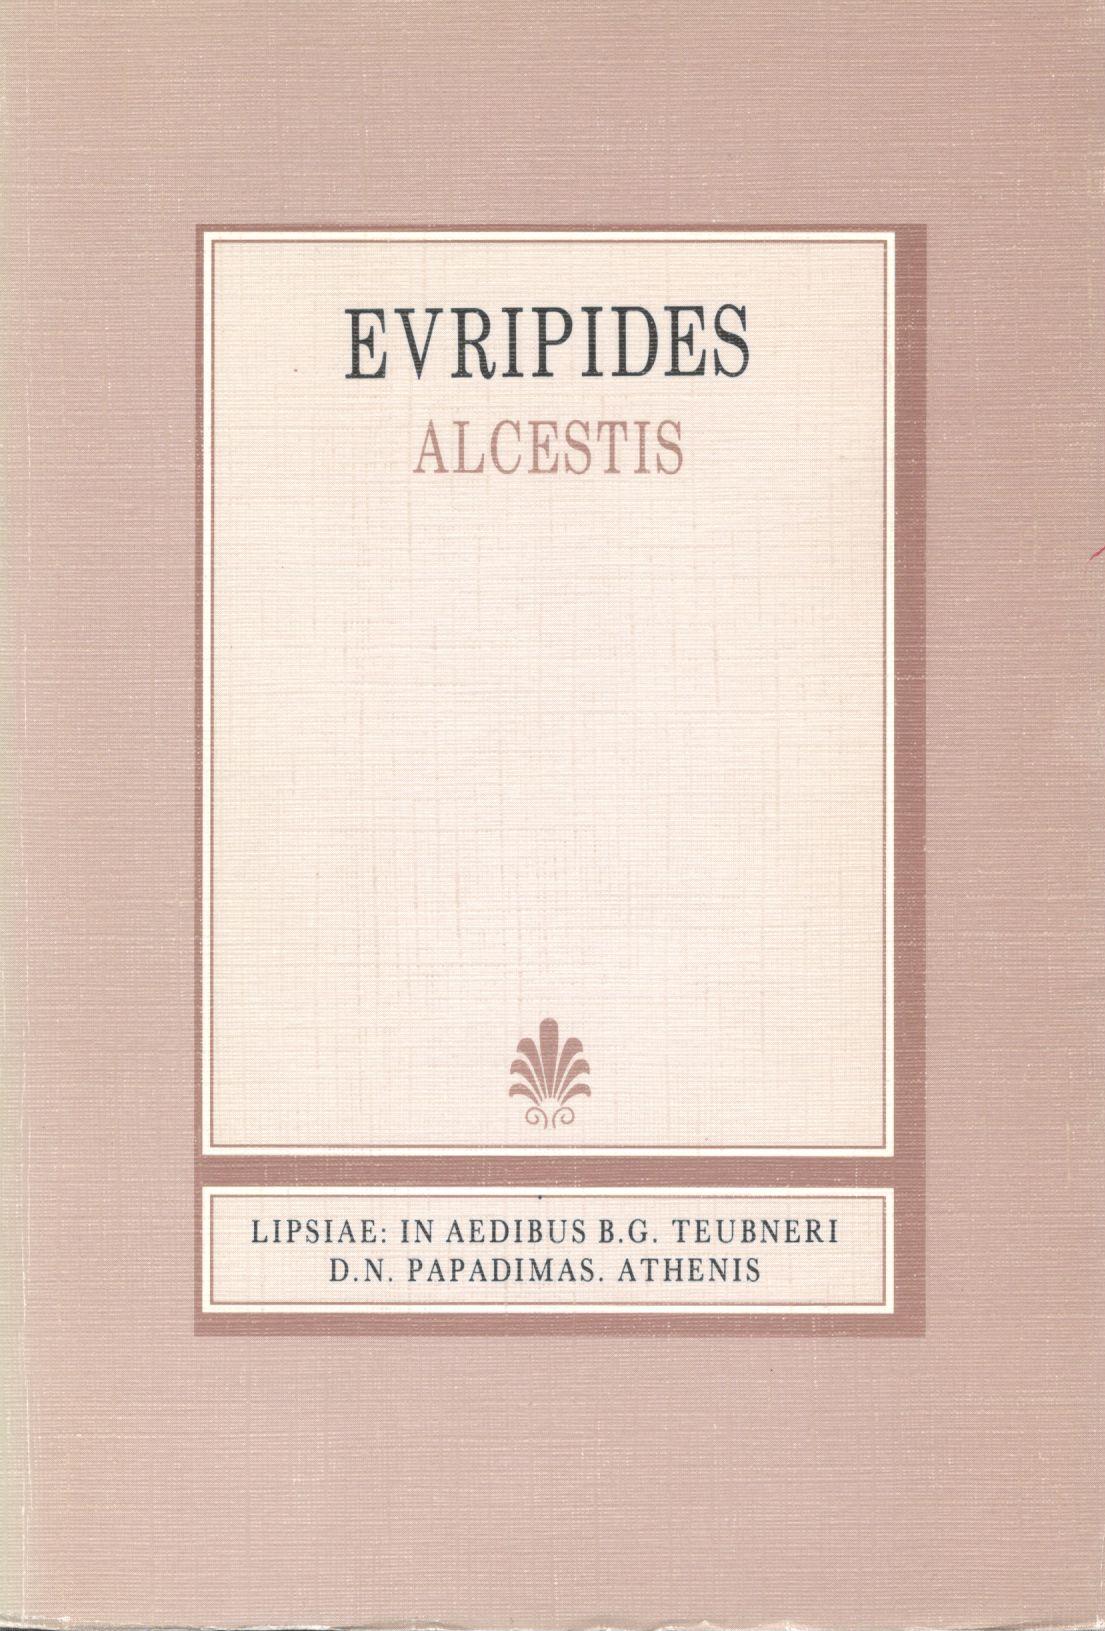 Evripidis, Alcestis [Ευριπίδου, 